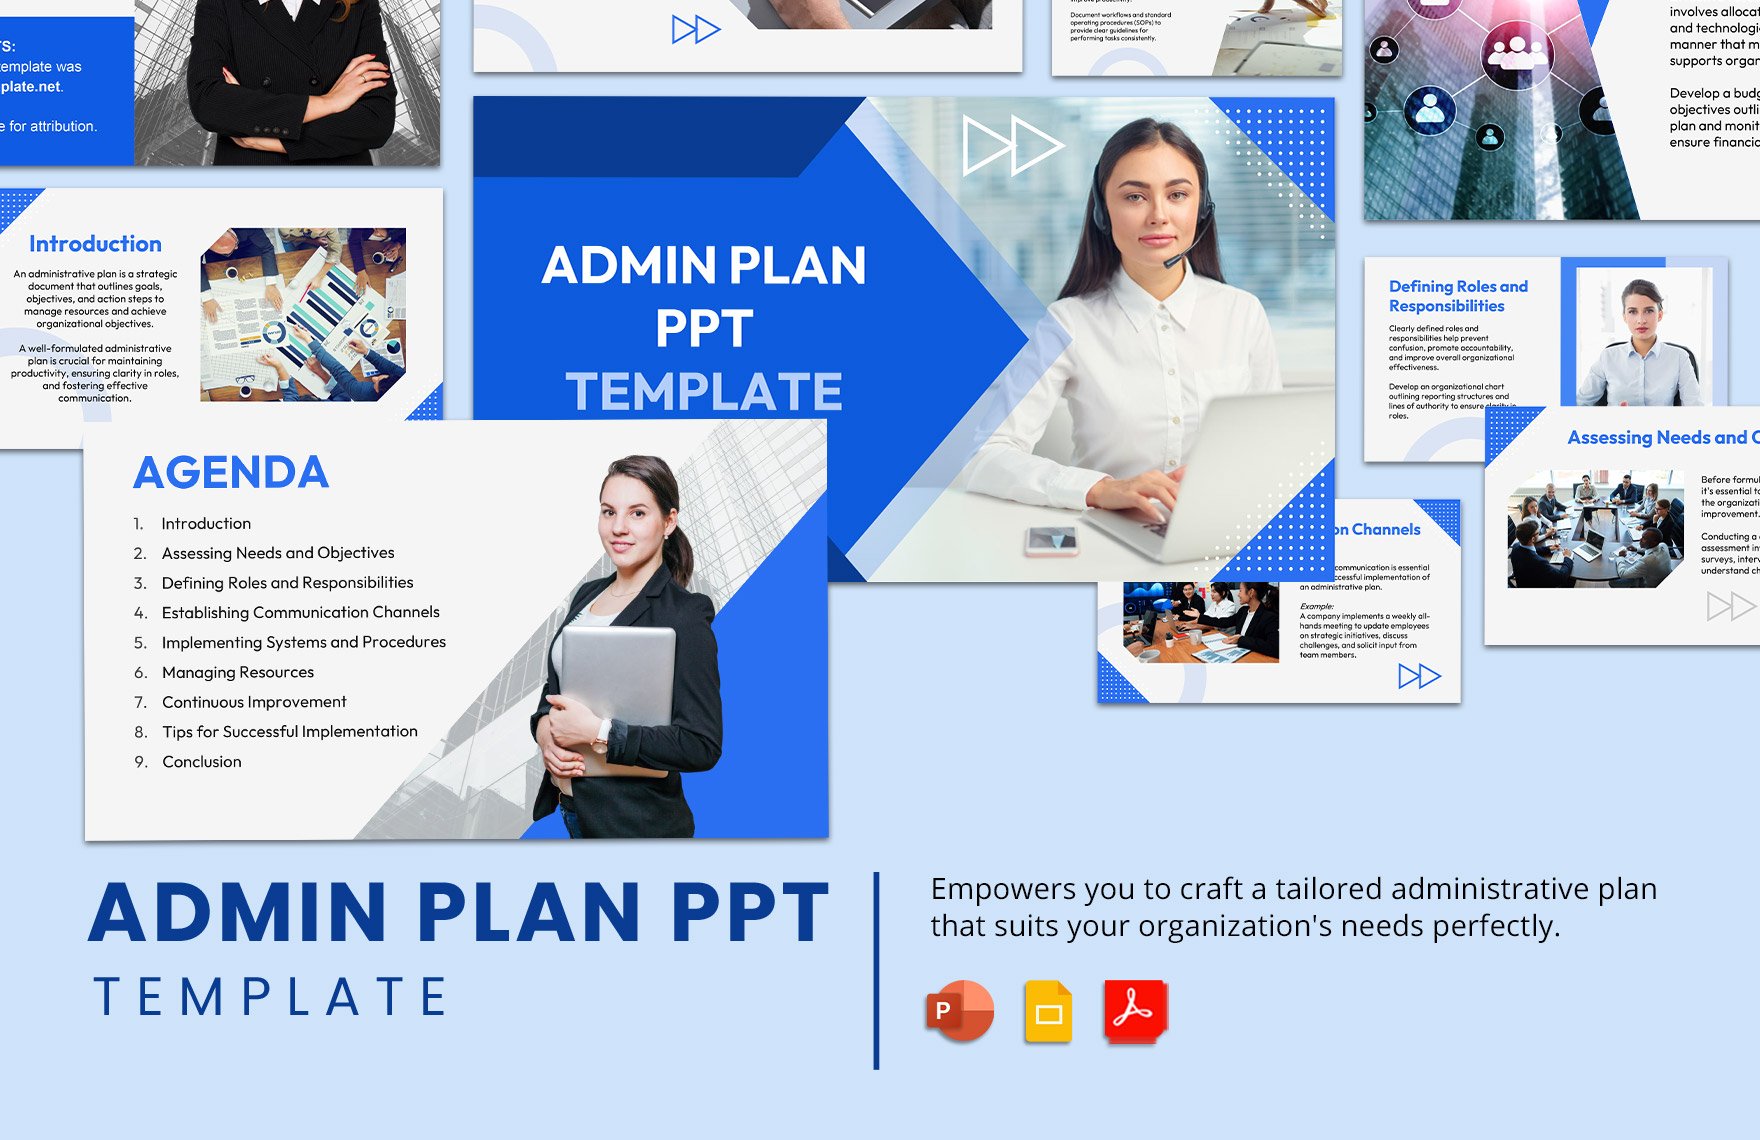 Admin Plan PPT Template